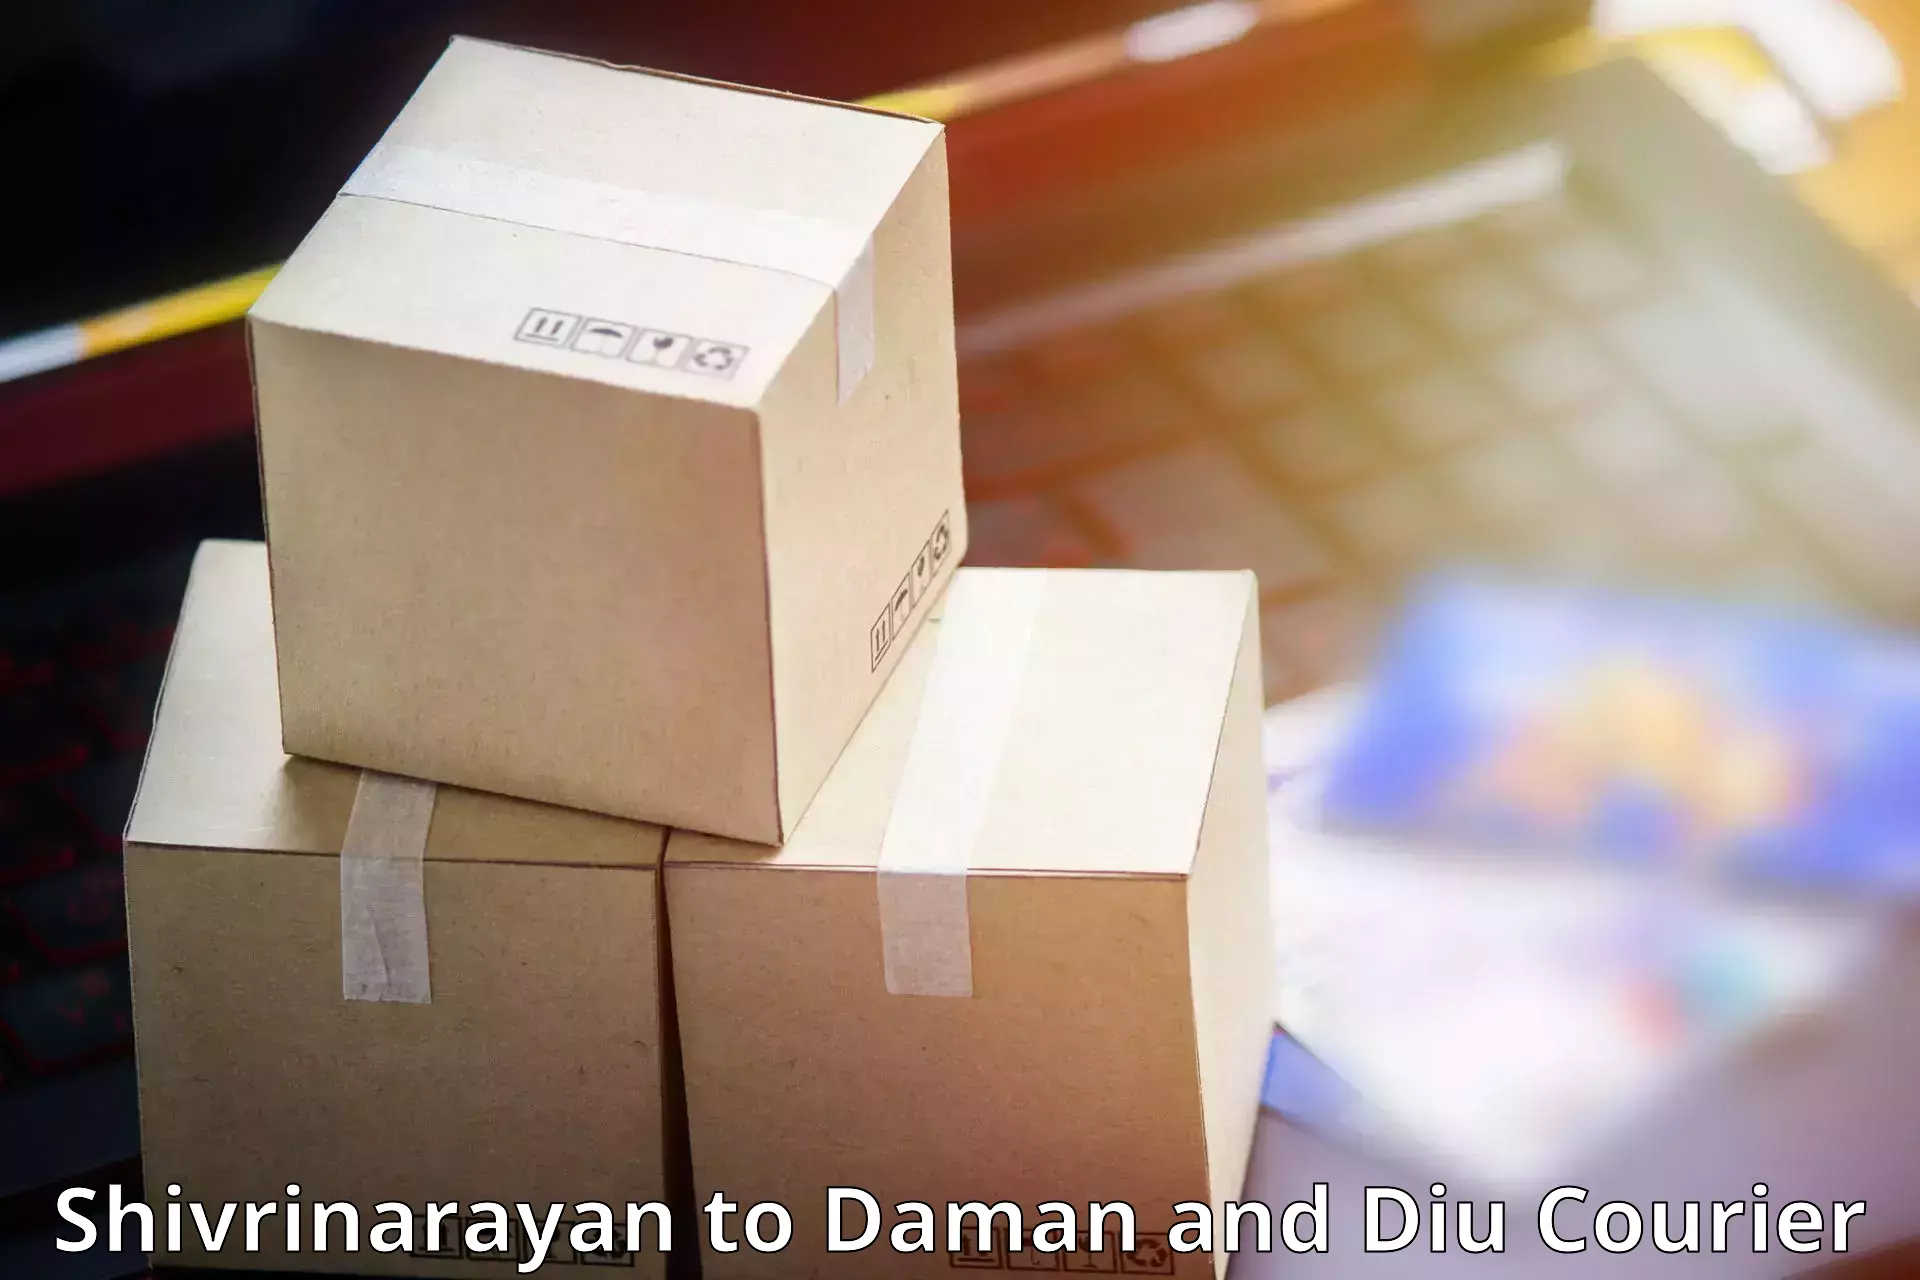 Professional courier handling Shivrinarayan to Daman and Diu